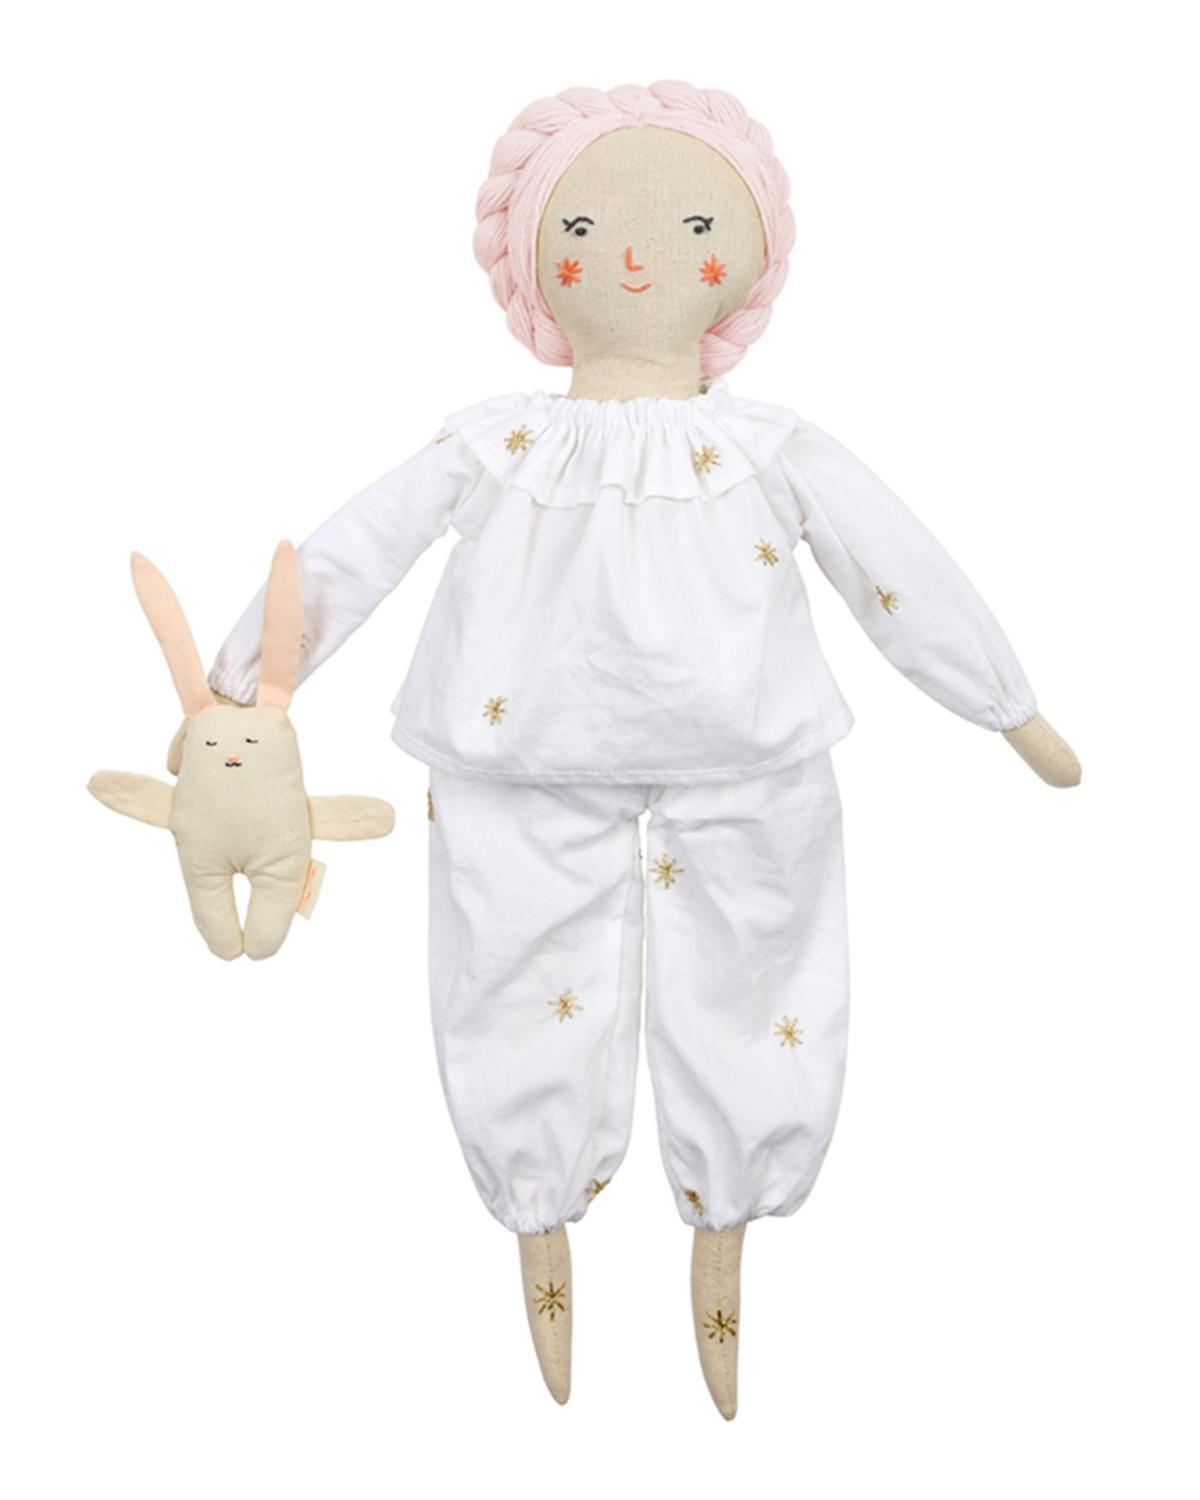 Little meri meri play pjs + bunny doll dress-up kit